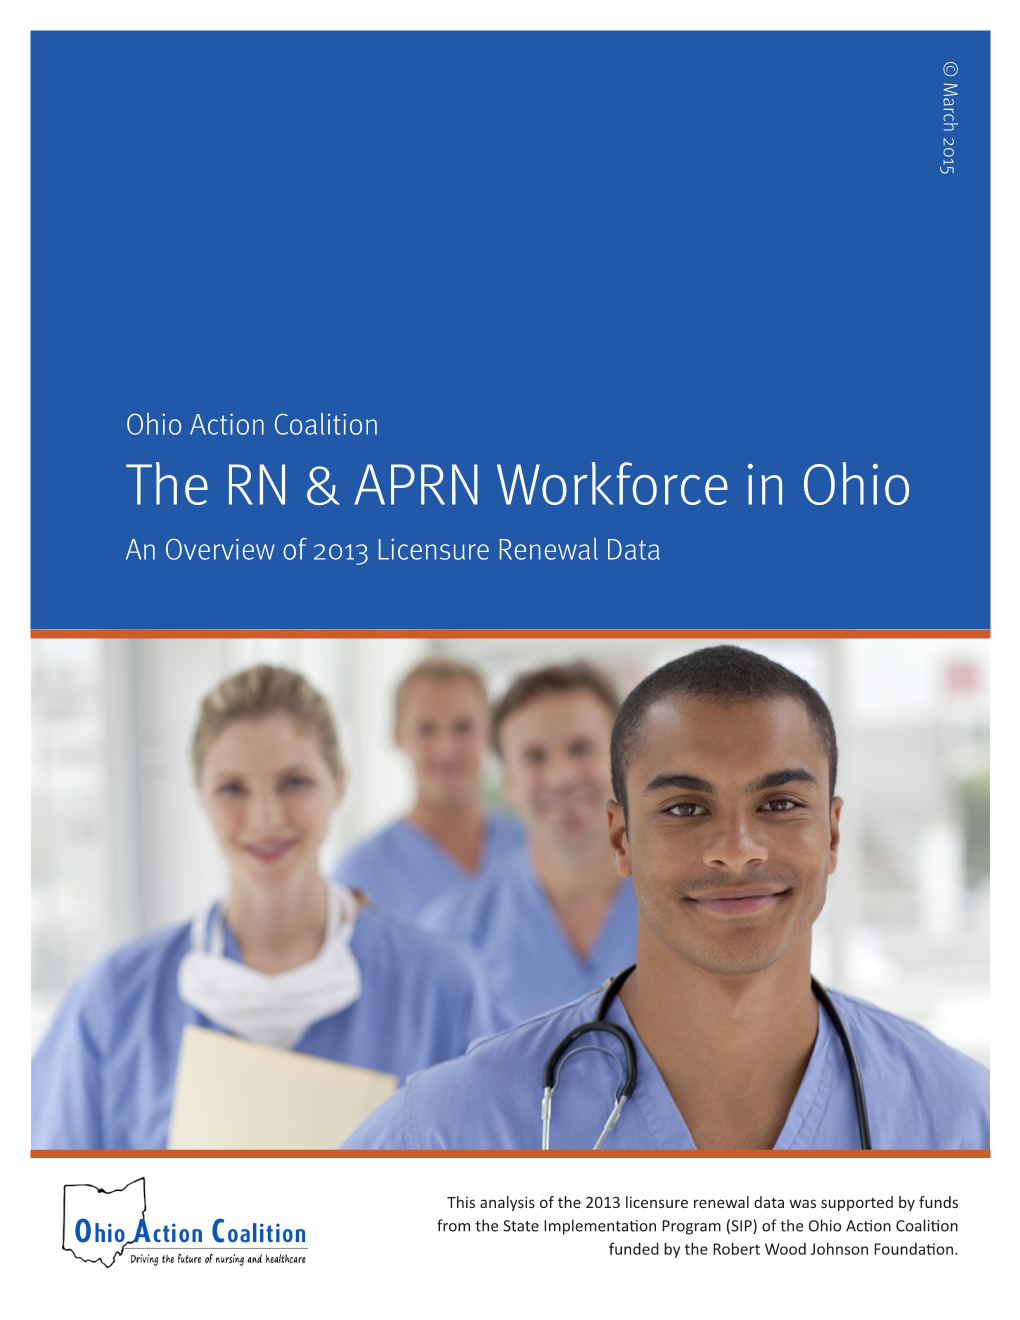 The RN & APRN Workforce in Ohio